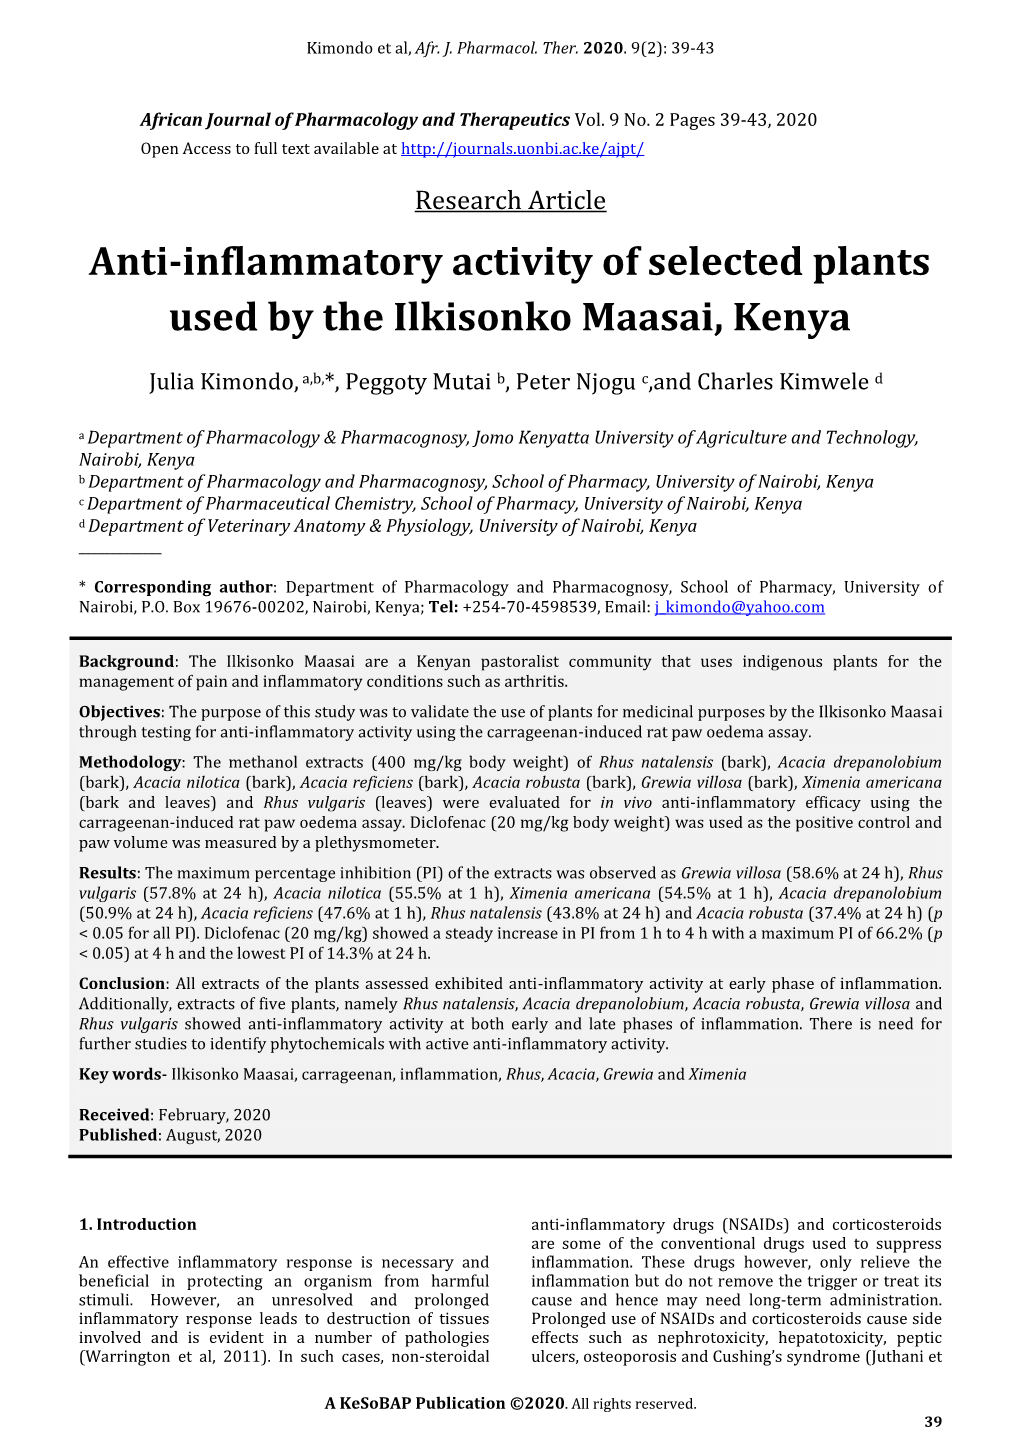 Anti-Inflammatory Activity of Selected Plants Used by the Ilkisonko Maasai, Kenya